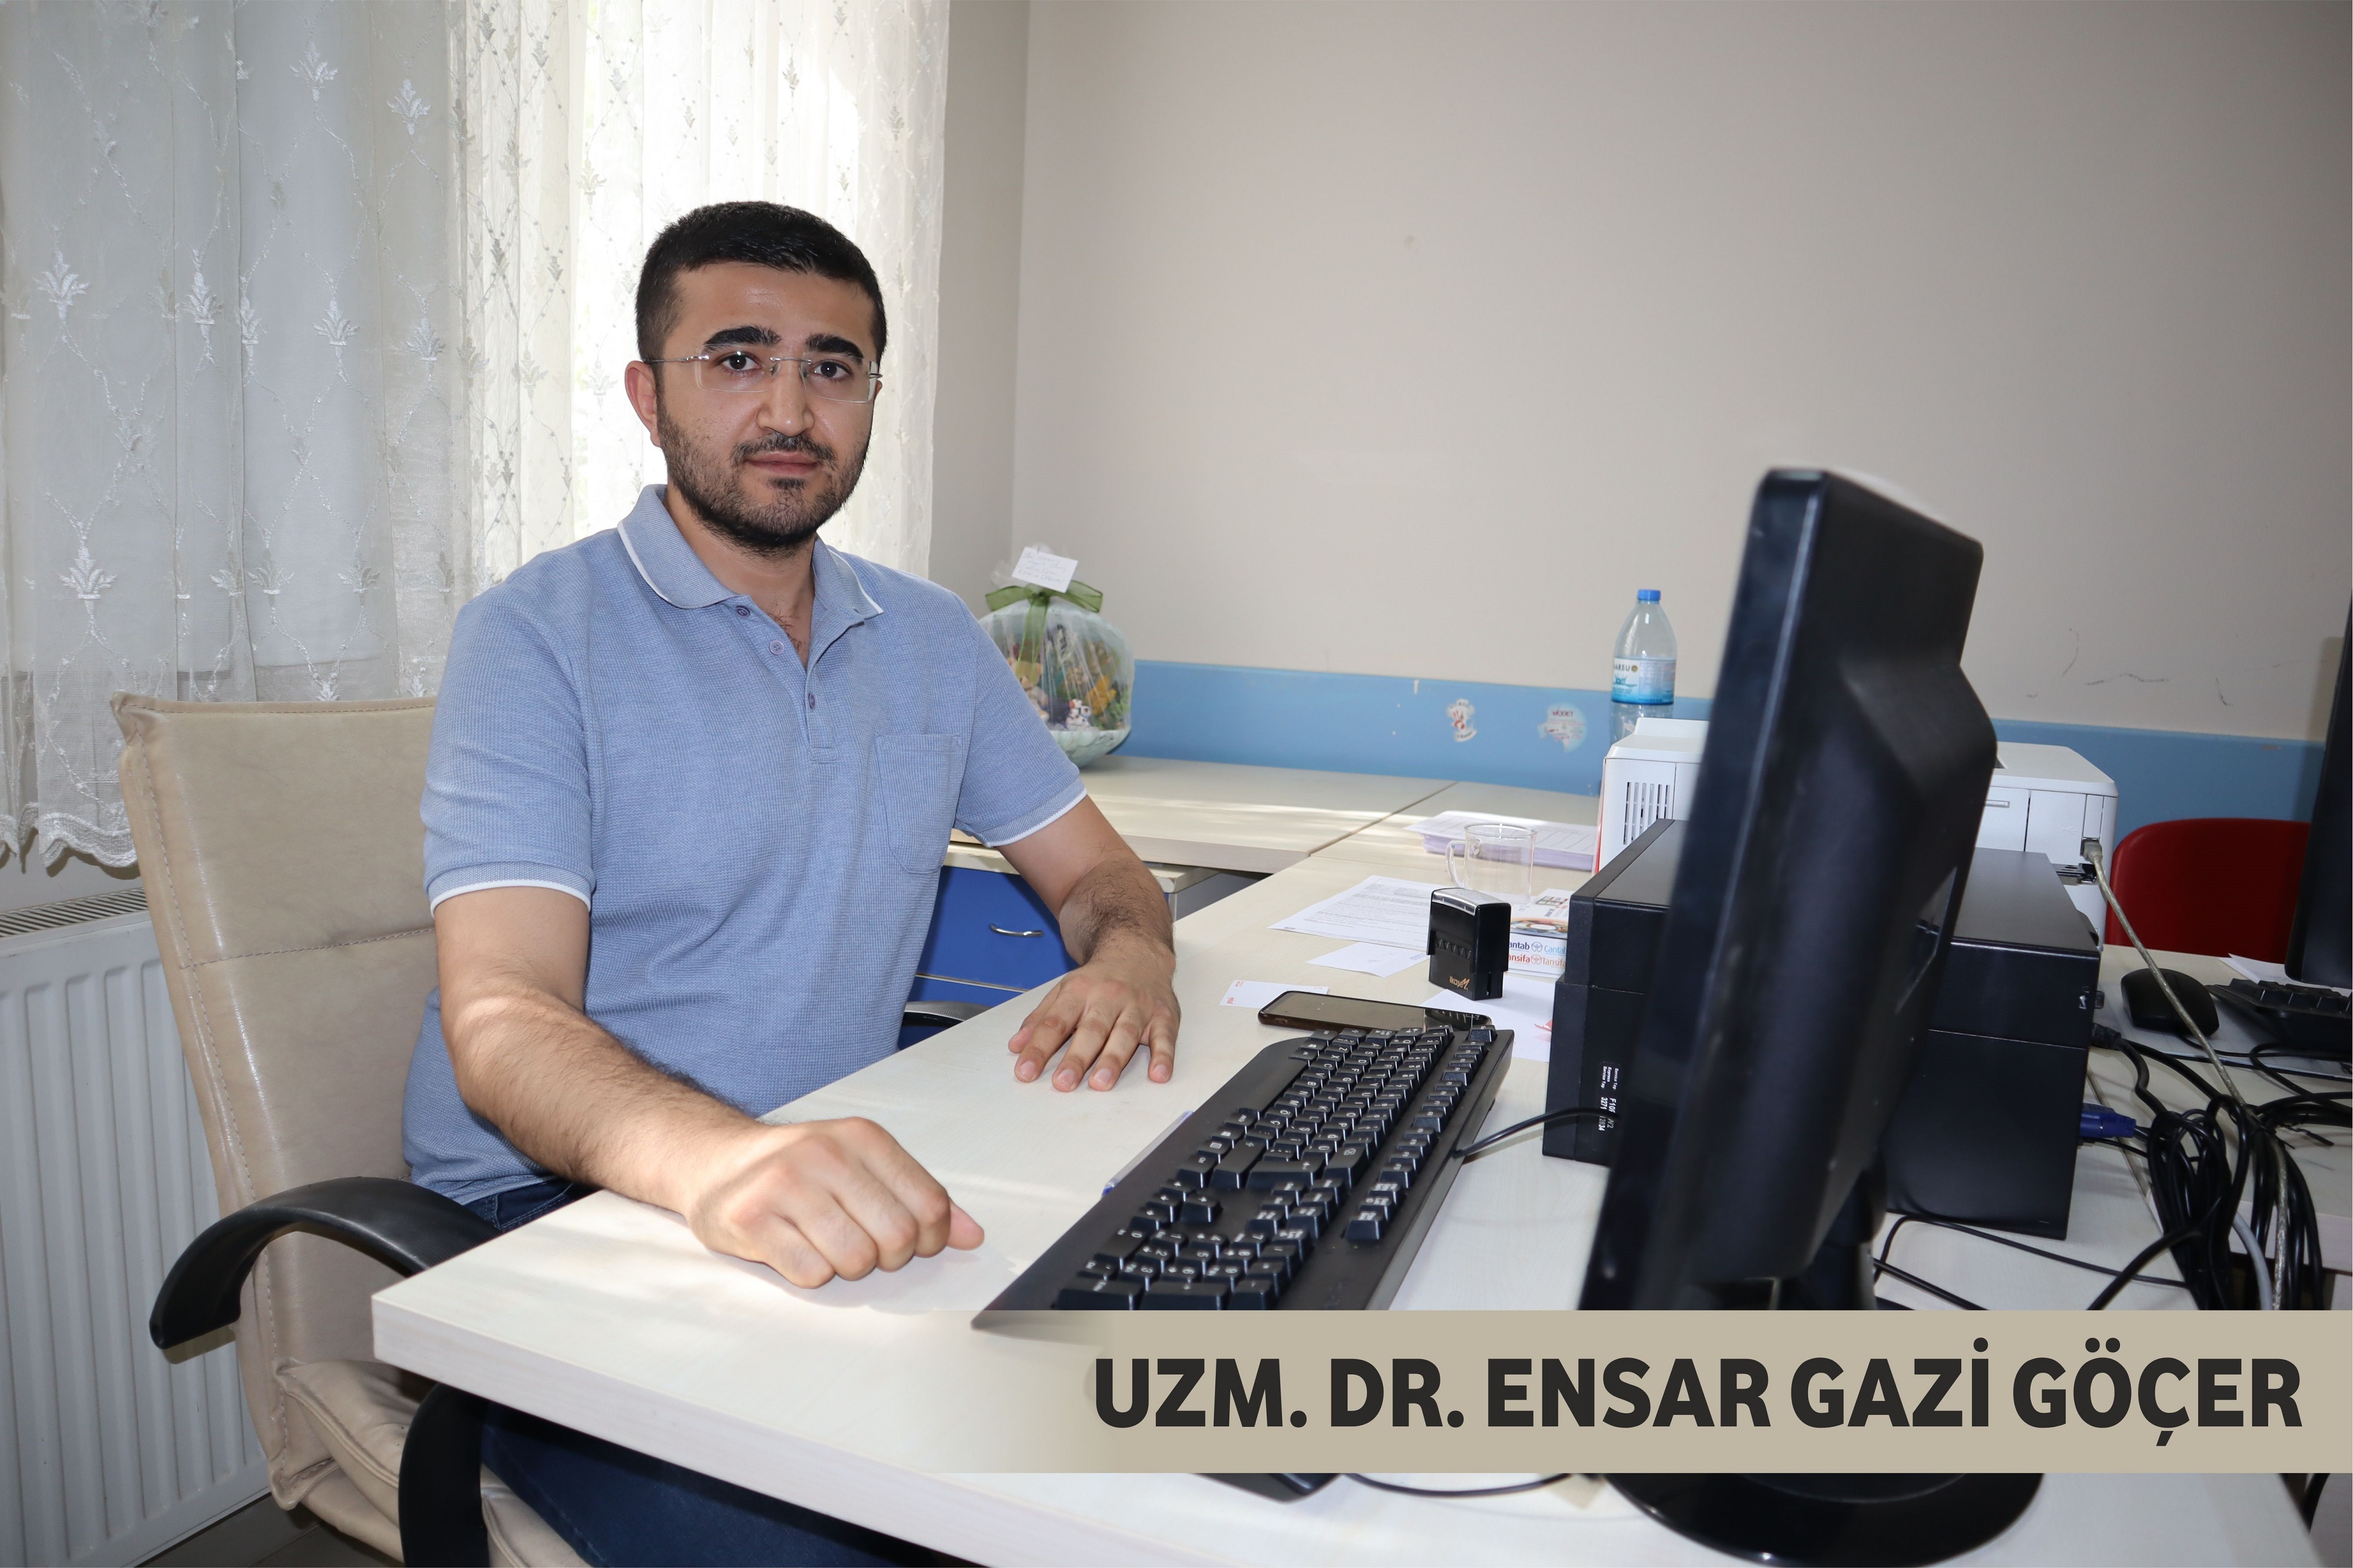 Uzm. Dr. Ensar Gazi Göçer